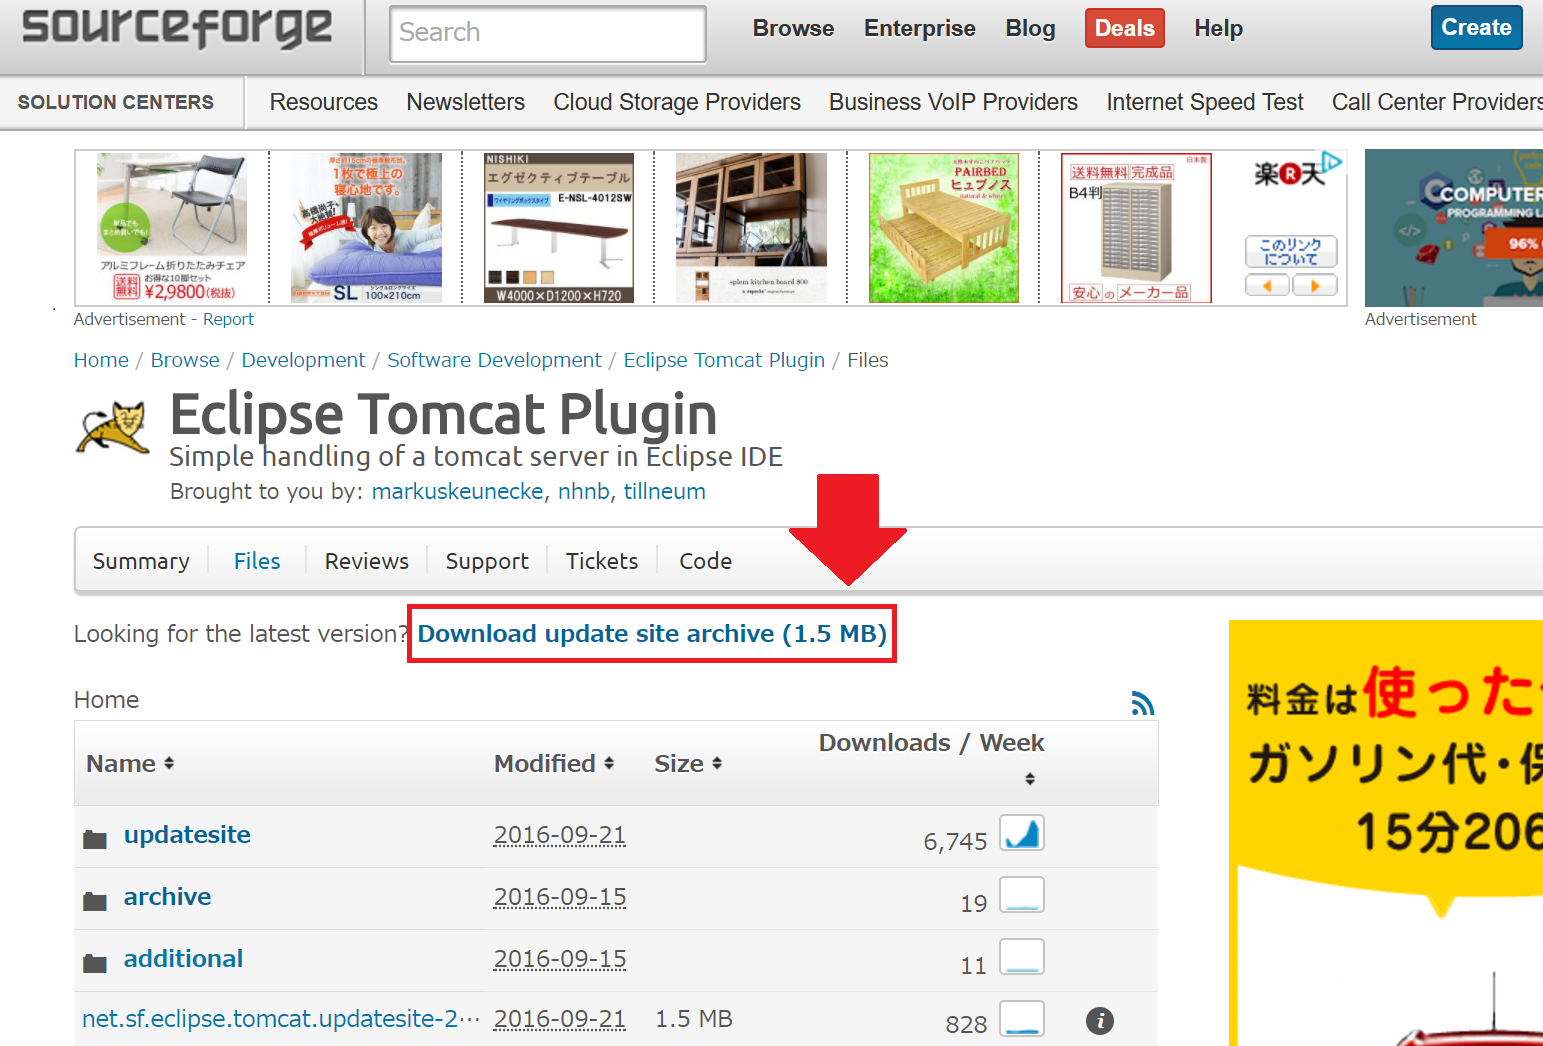 FireShot Capture 7 - Eclipse Tomcat Plugin -_ - https___sourceforge.net_projects_tomcatplugin_files_.png